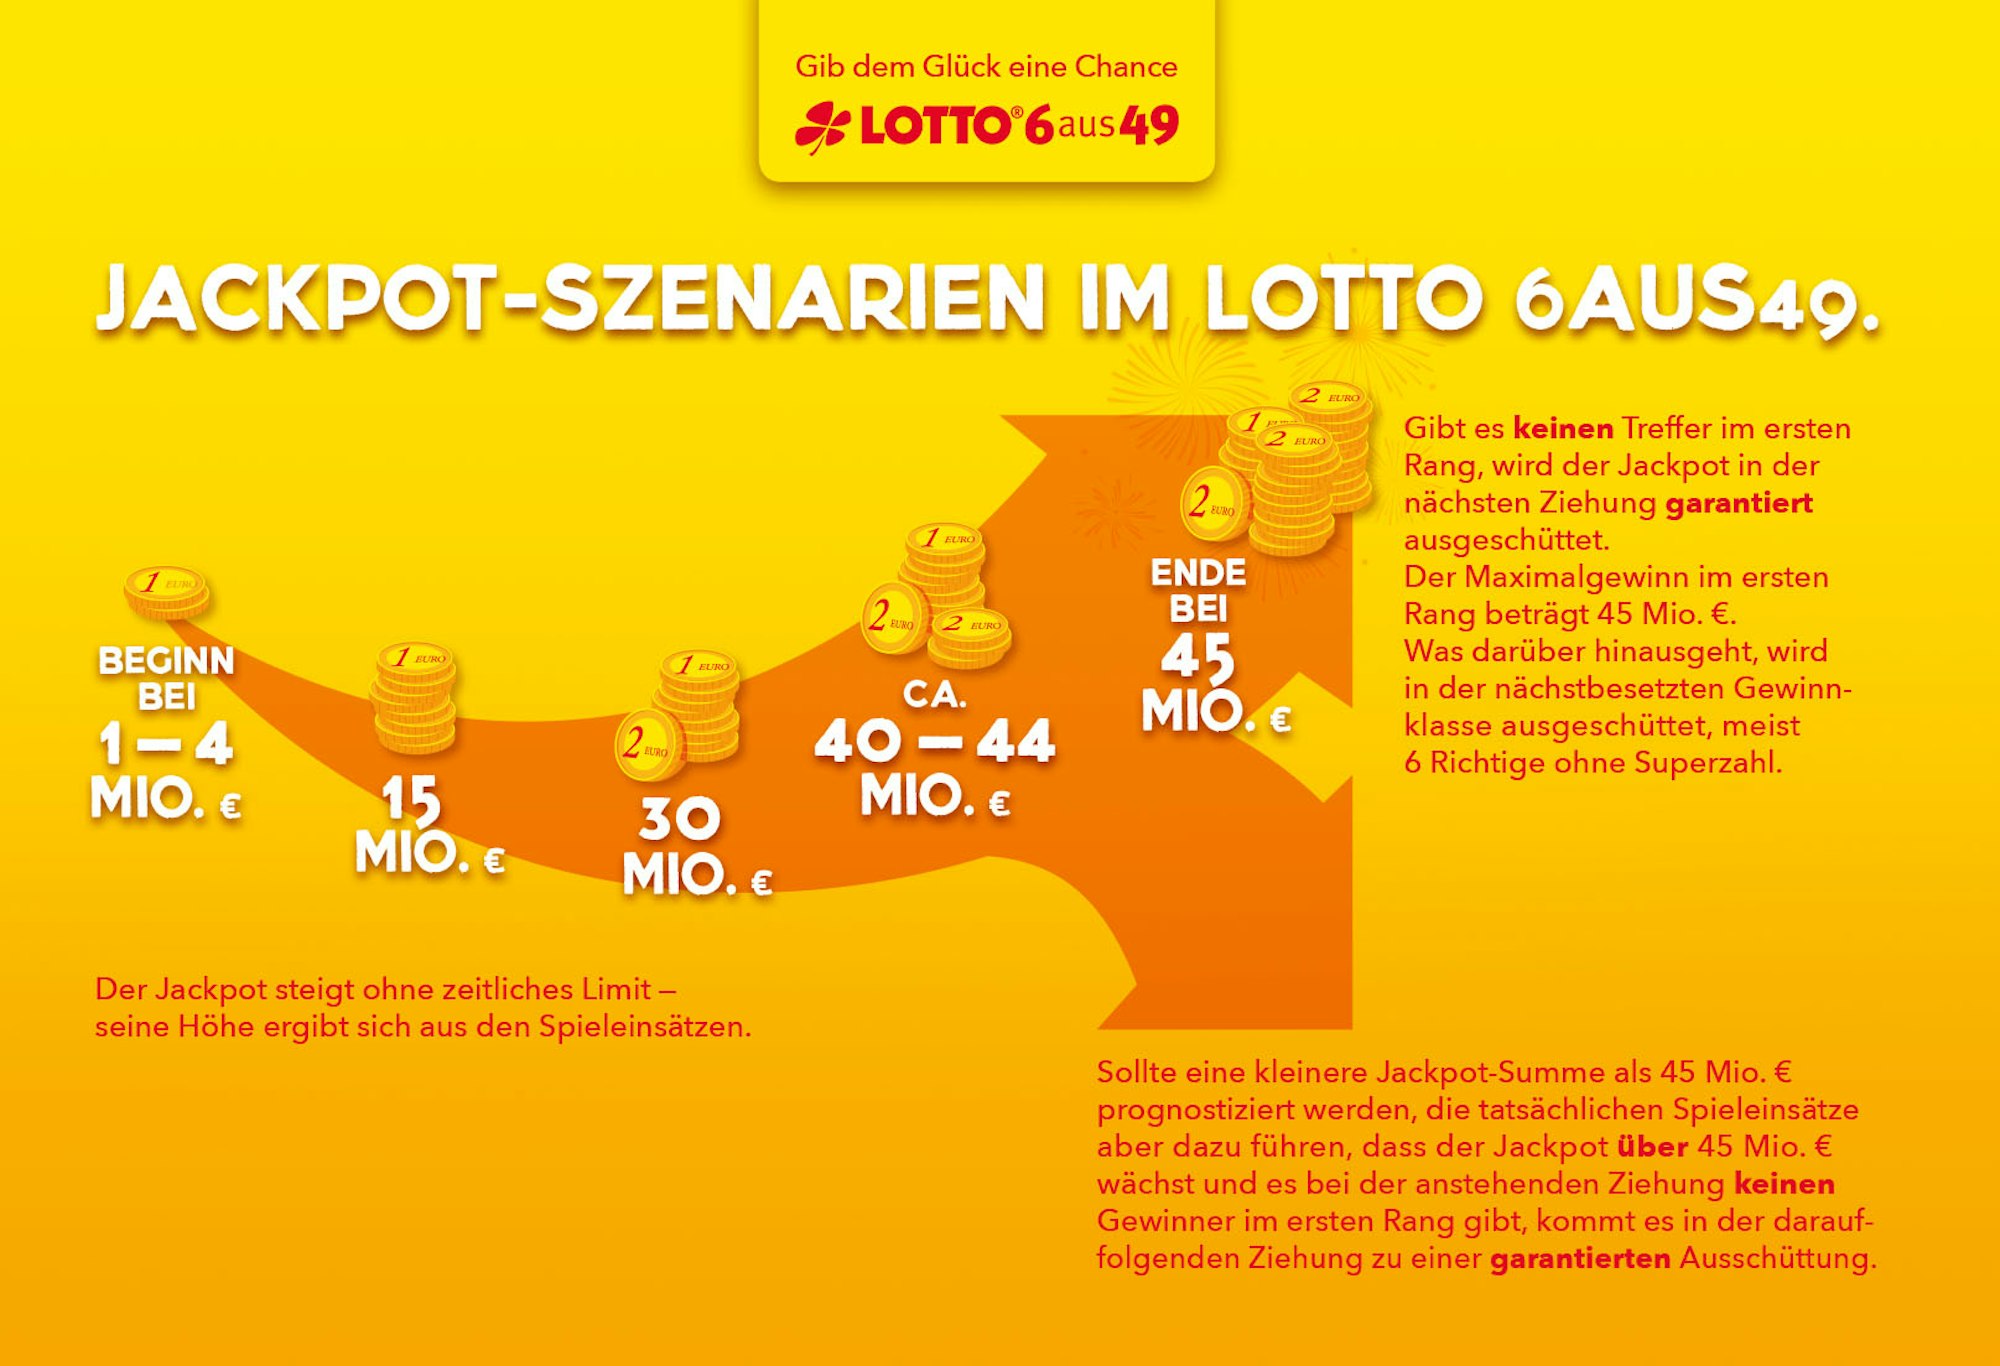 201130 LOTTO - Jackpot wird garantiert ausgeschüttet (c) WestLotto